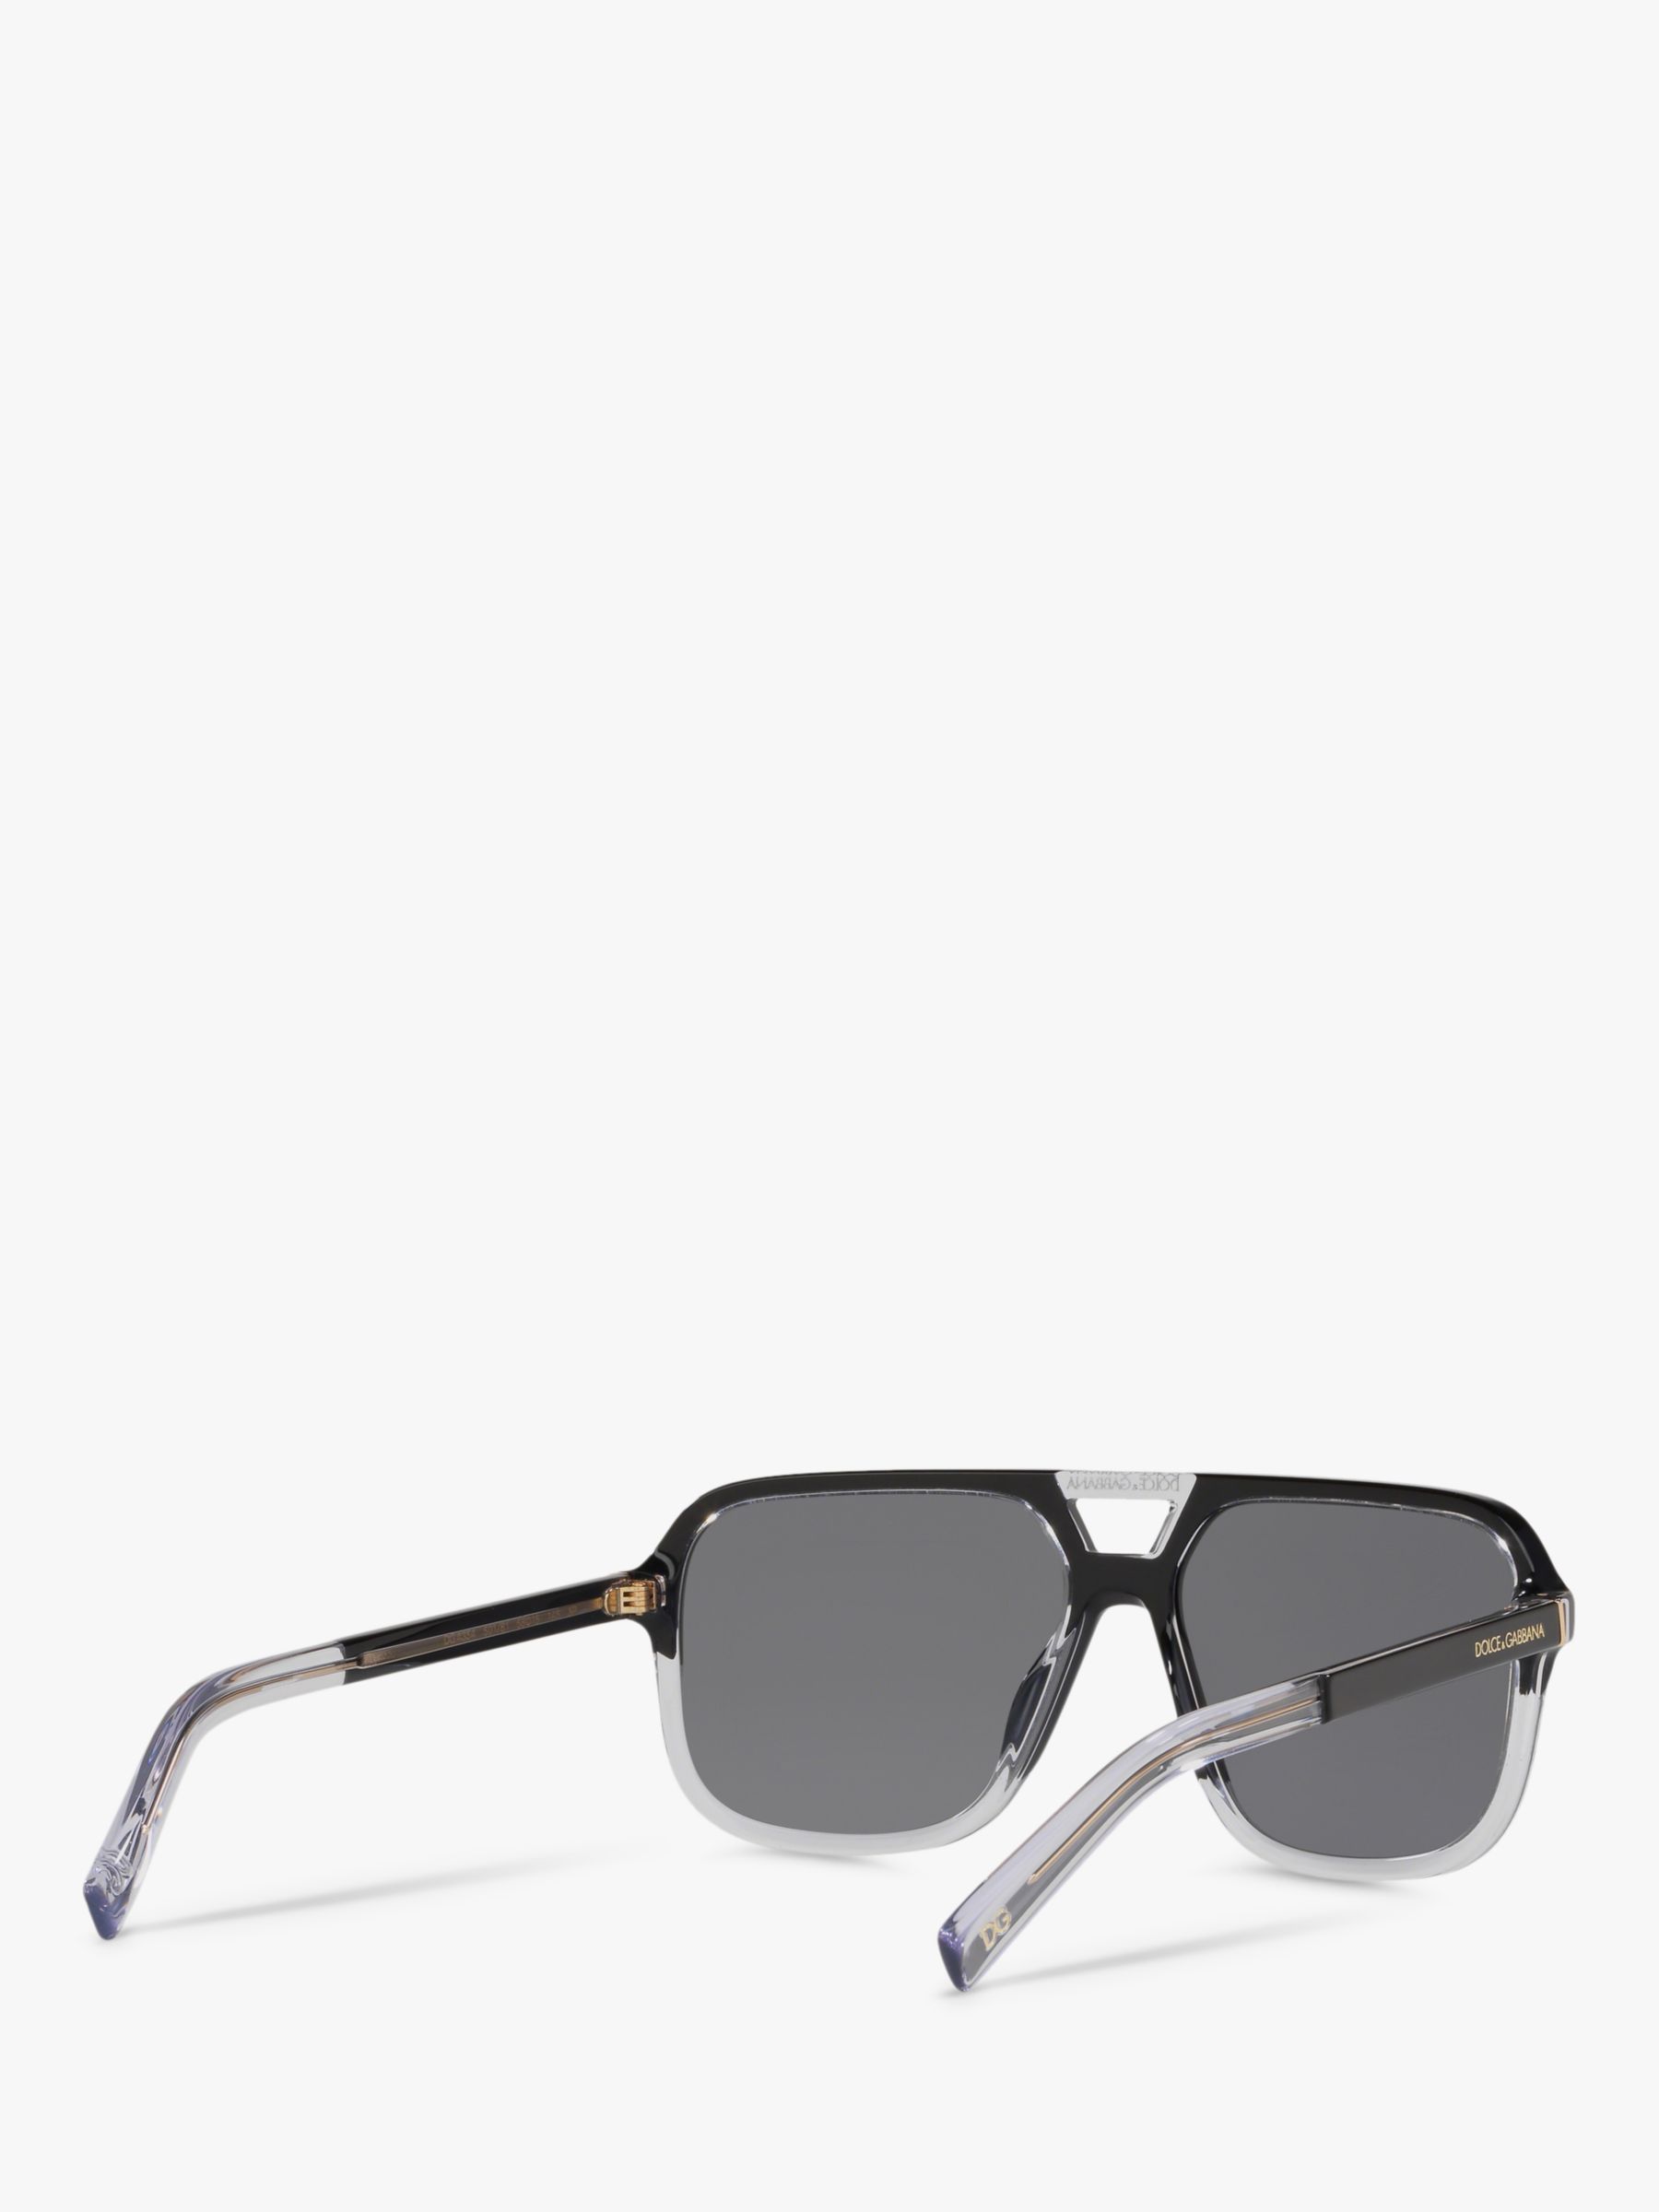 Buy Dolce & Gabbana DG4354 Men's Polarised Square Sunglasses, Black Clear/Grey Online at johnlewis.com